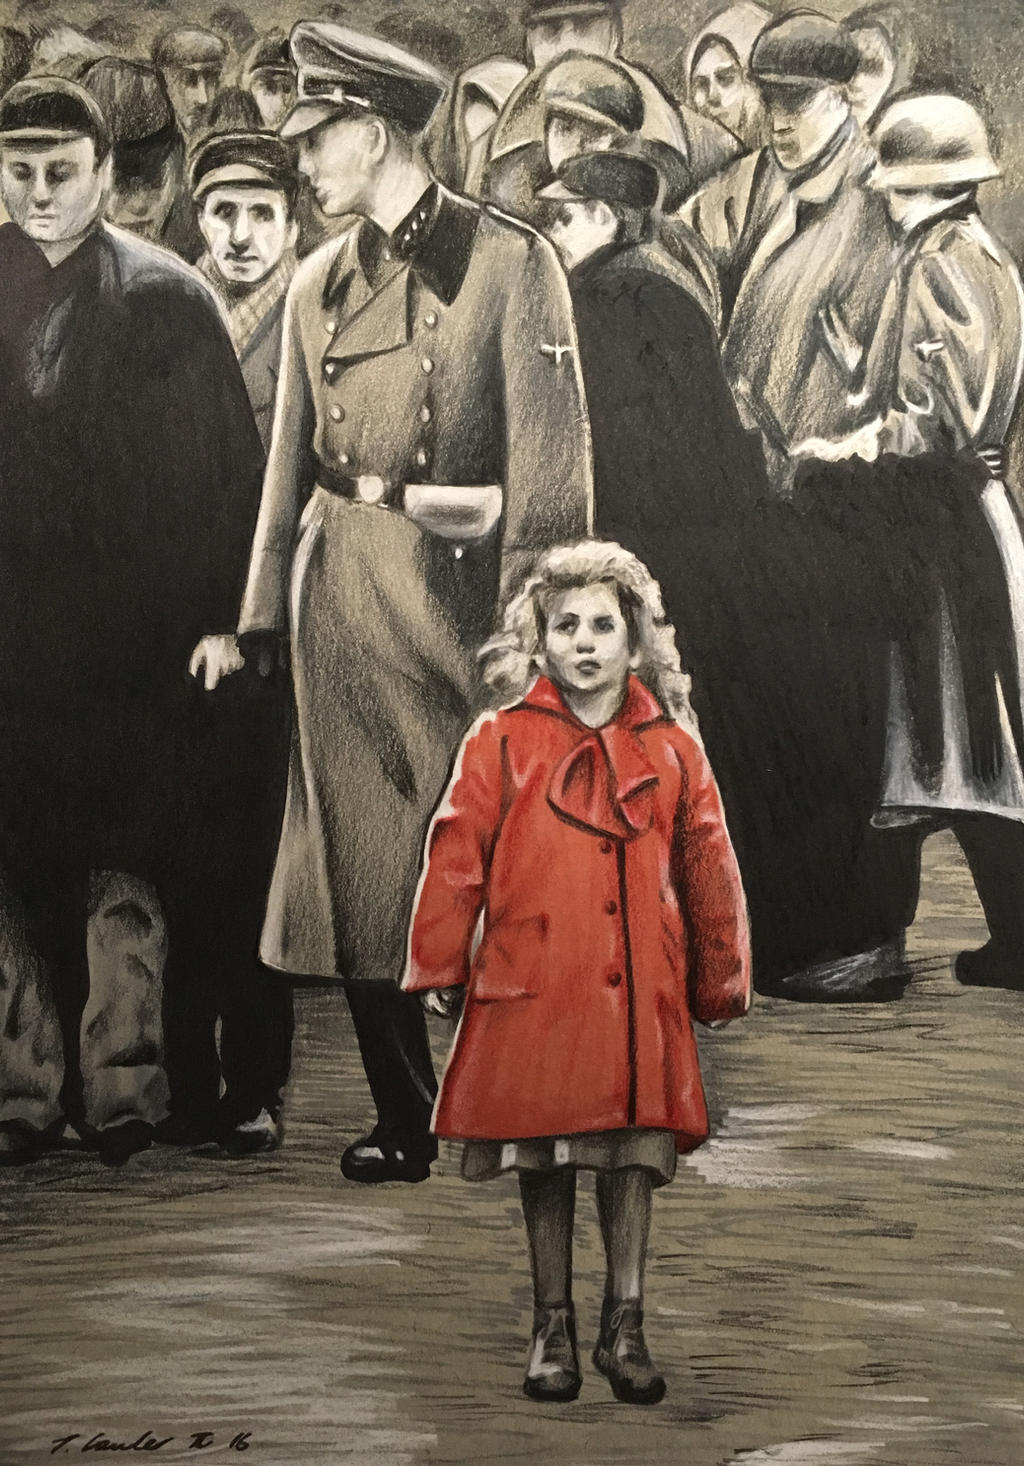 affjedring arve design Schindlers List girl in the red coat drawing by billyboyuk on DeviantArt